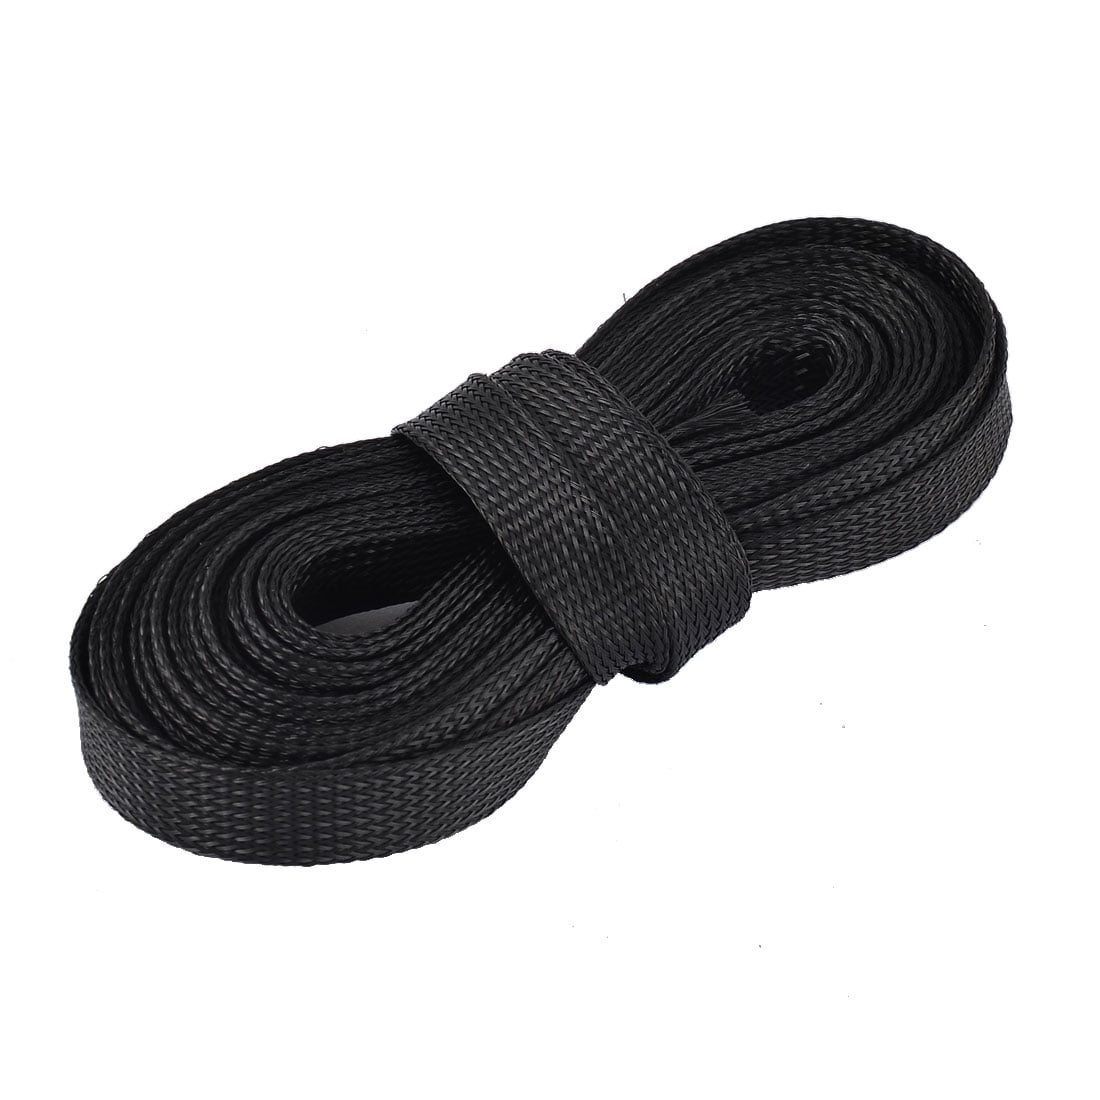 Many Sizes Black Expandable Braided Sleeving Cable Harness Sheathing Sleeveing